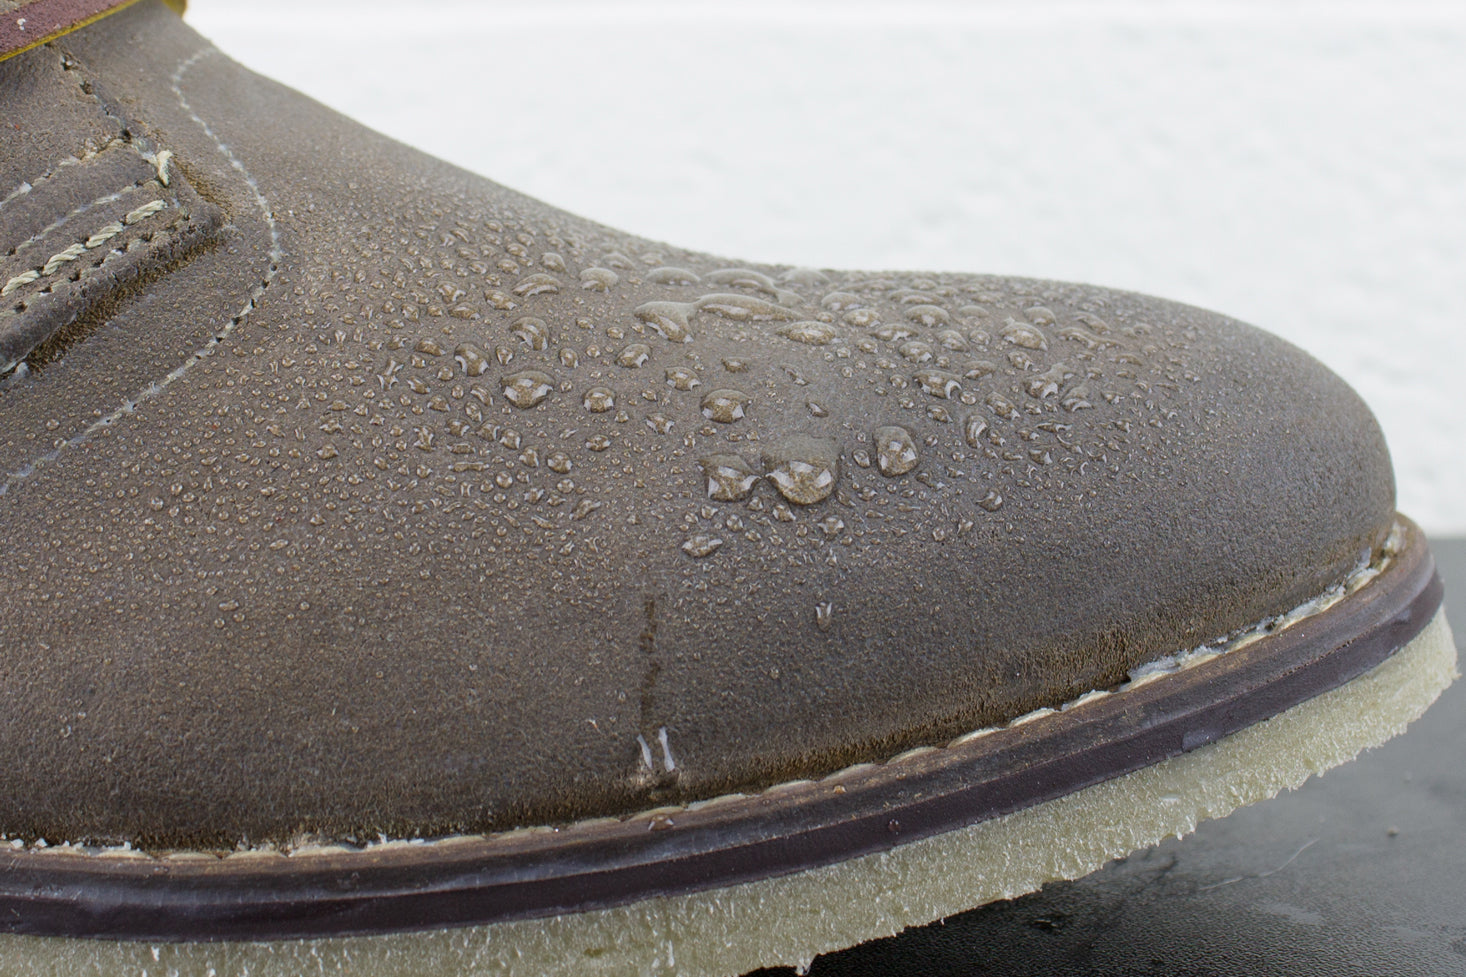 Dubbin Wax - For Full Grain Leather Boots